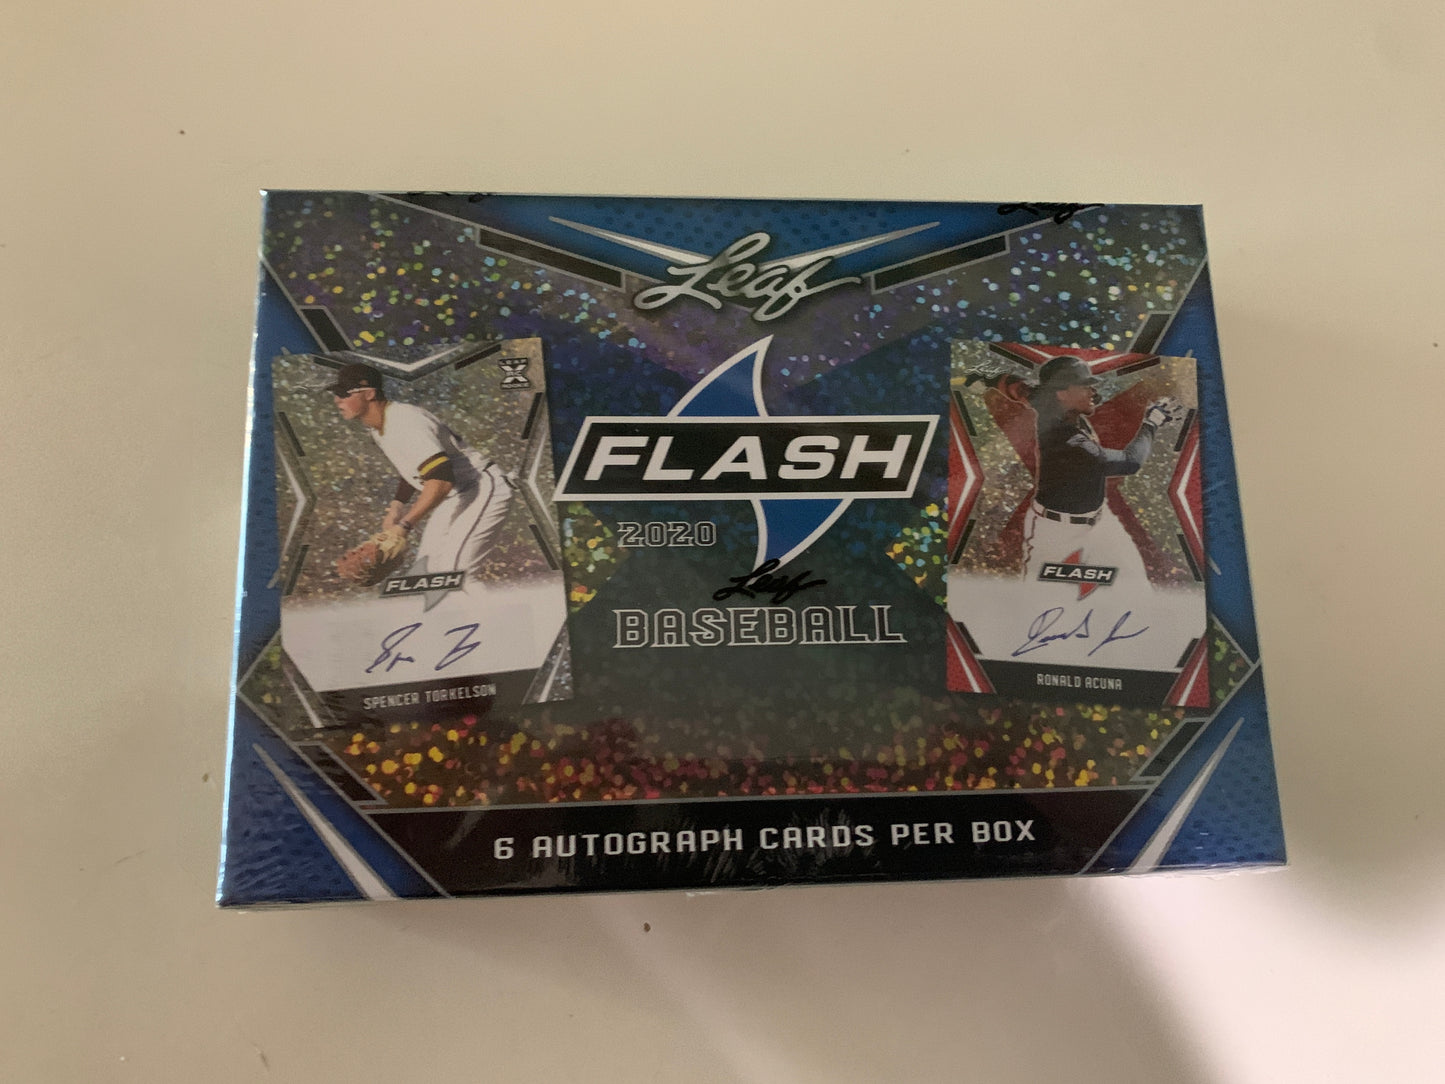 2020 Leaf Flash Baseball Hobby Box